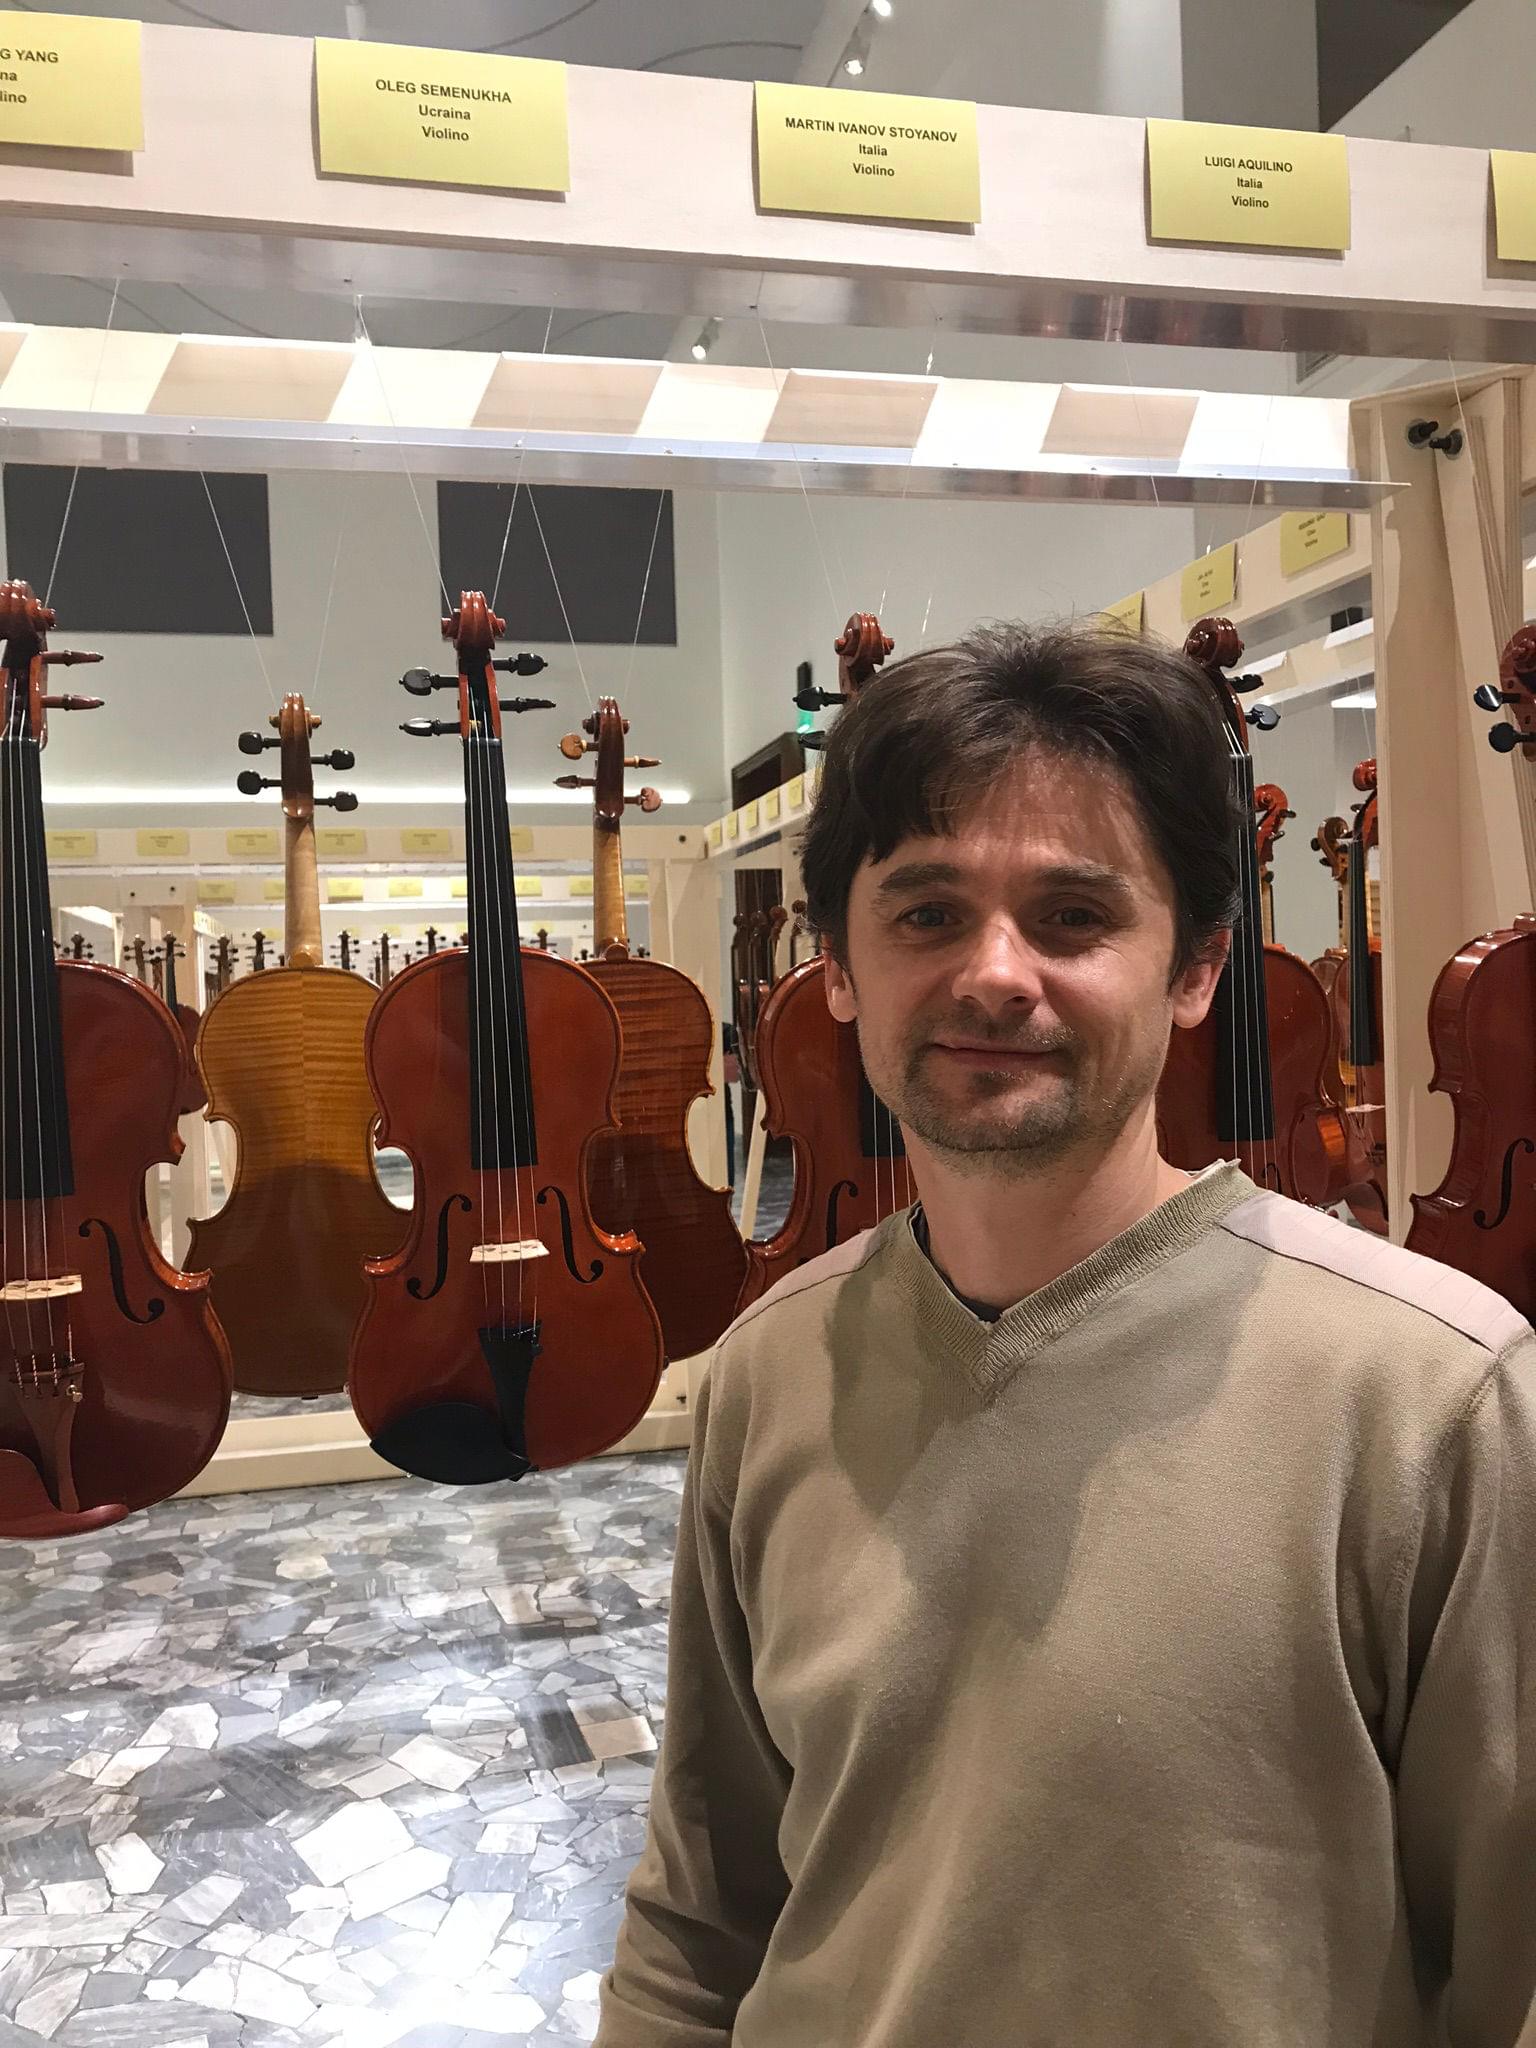 Oleg Semenukha - violin maker